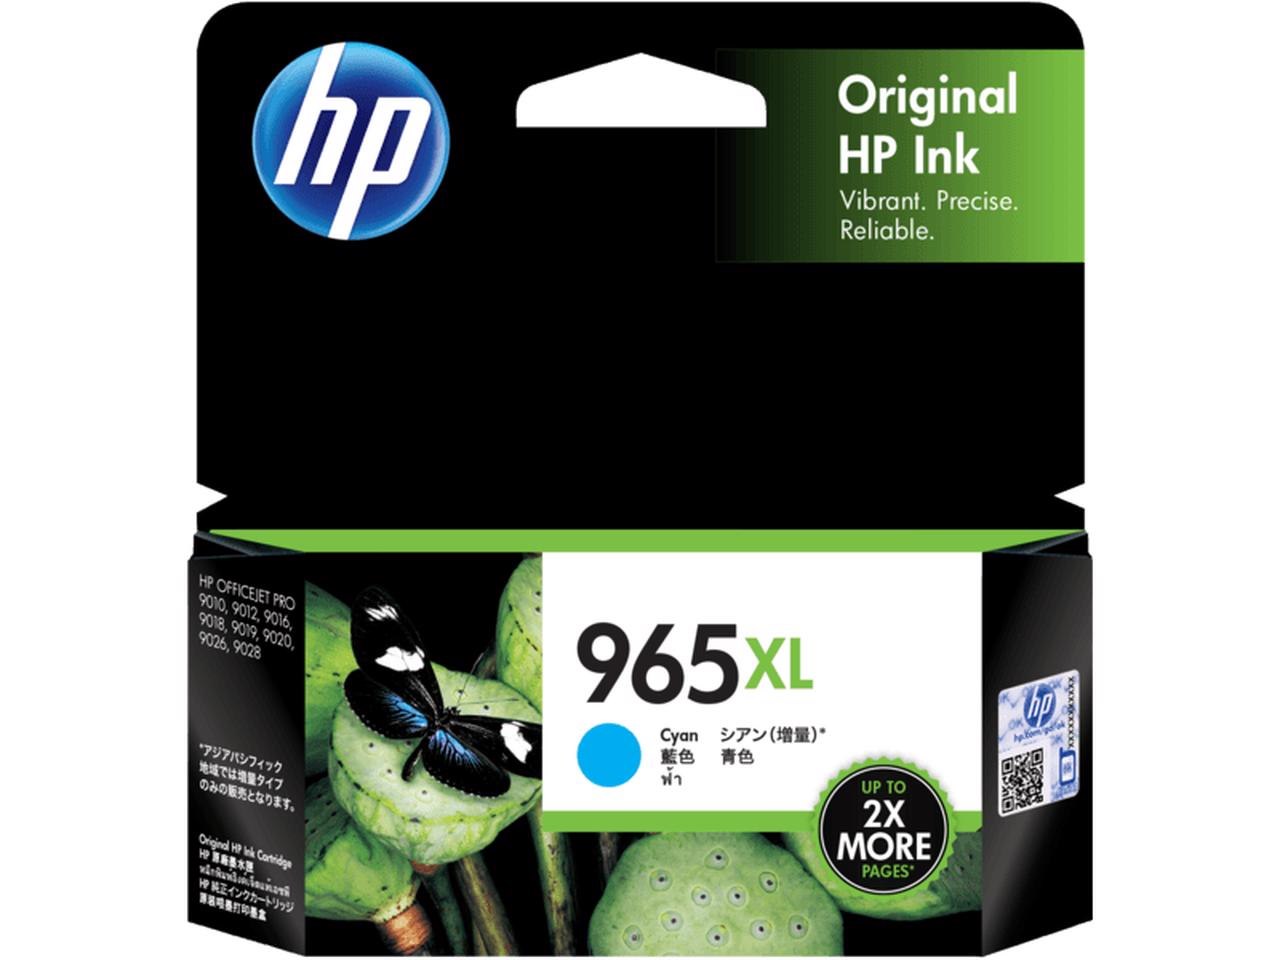 HP 965XL Original High Yield Inkjet Ink Cartridge - Cyan Pack